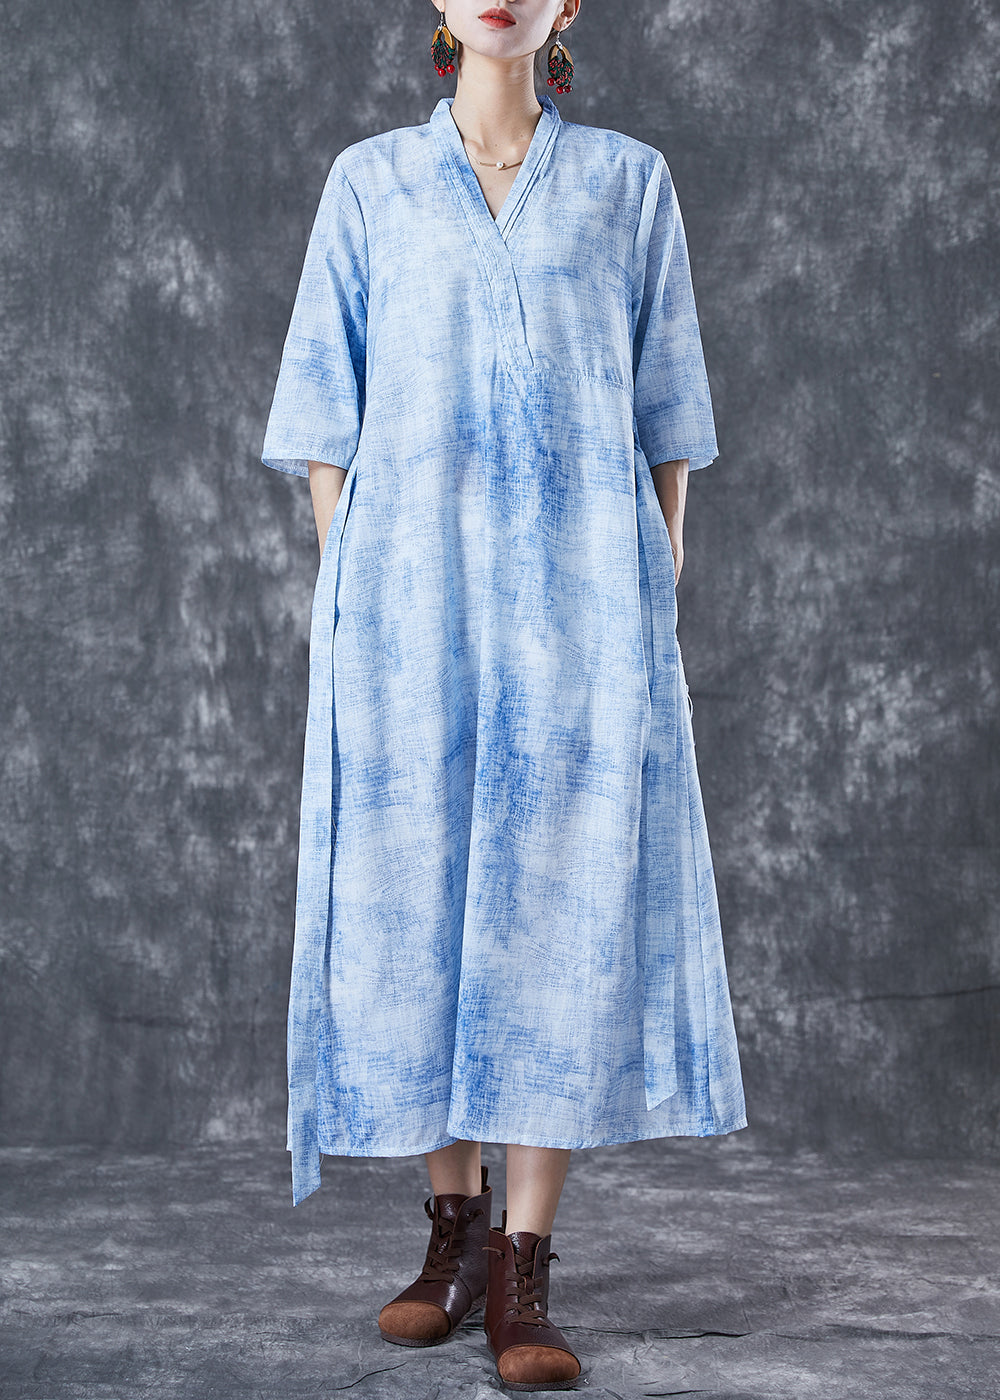 Modern Blue V Neck Tie Dye Linen Cinched Dress Half Sleeve TA1056